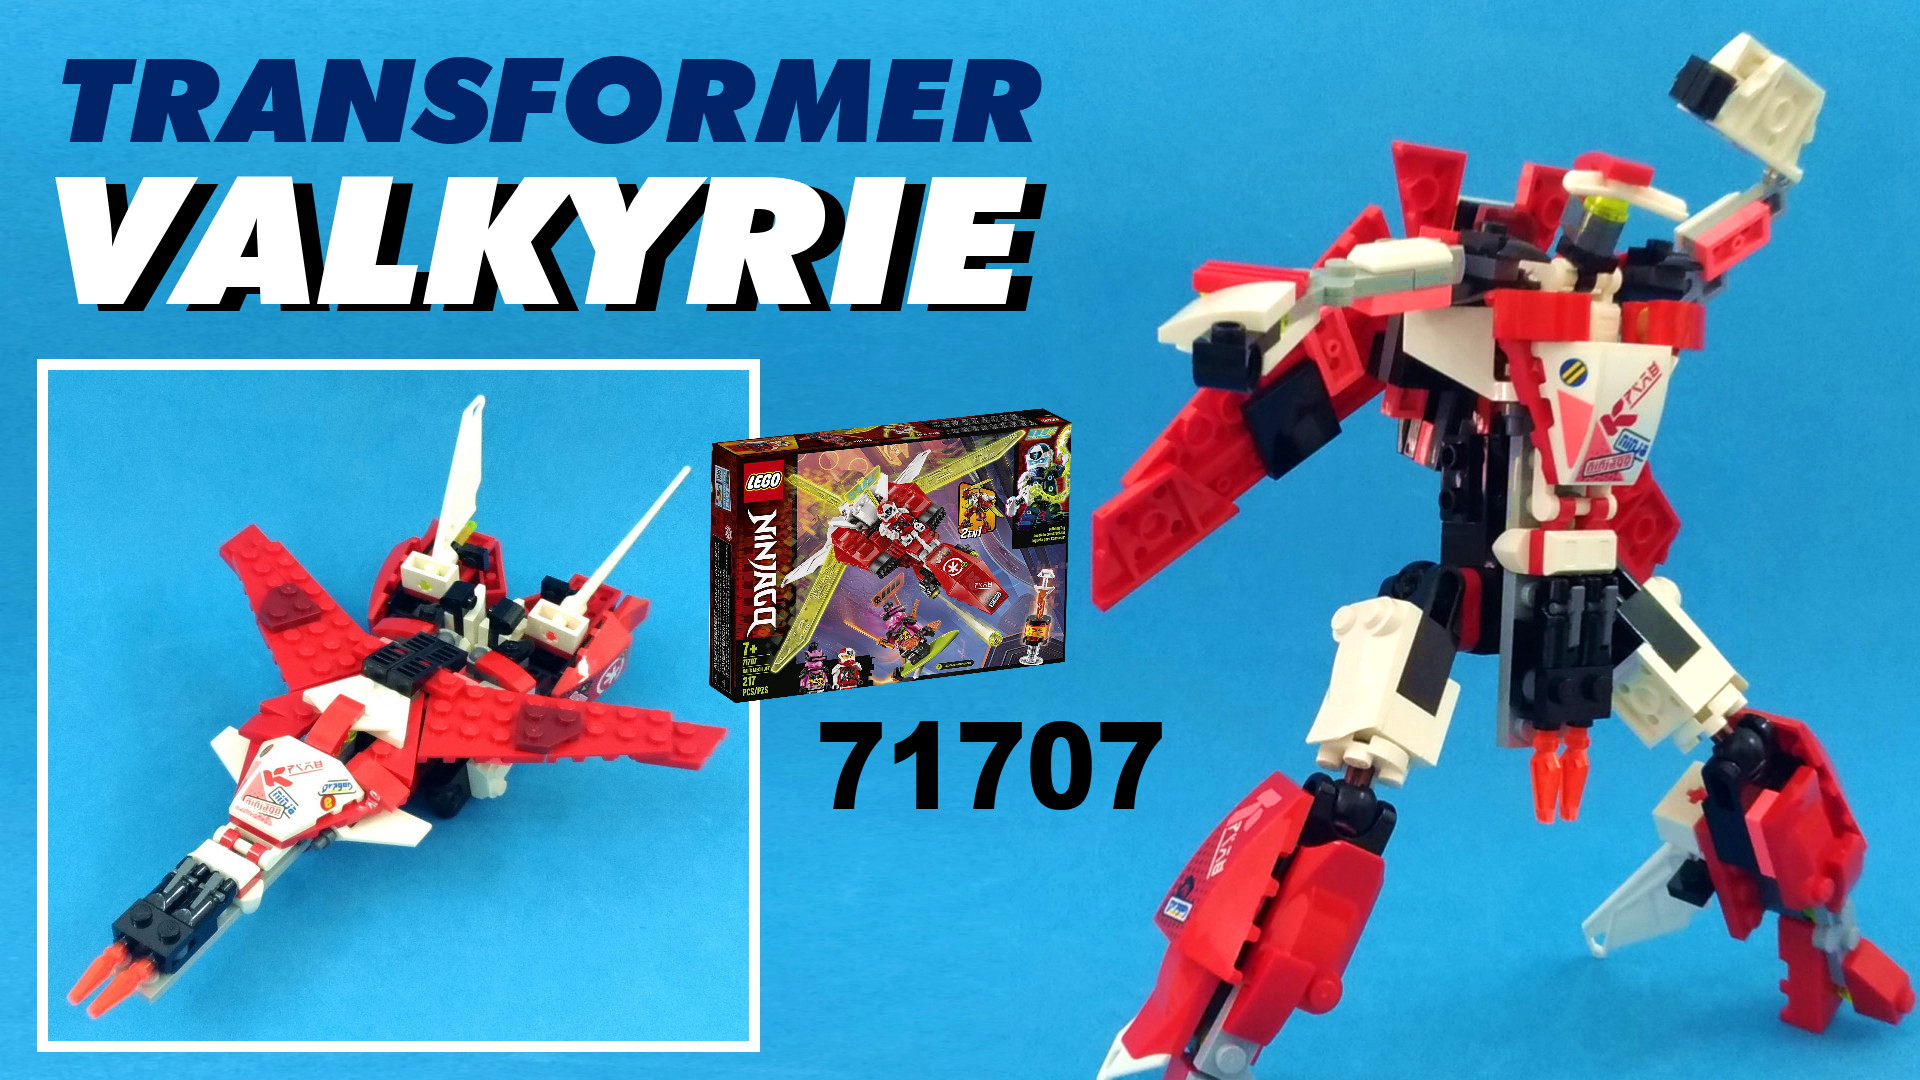 Alanyuppie's LEGO Transformers: Video Tutorial: Transformer VF-1 Valkyrie from Ninjago 71707: Mech Jet